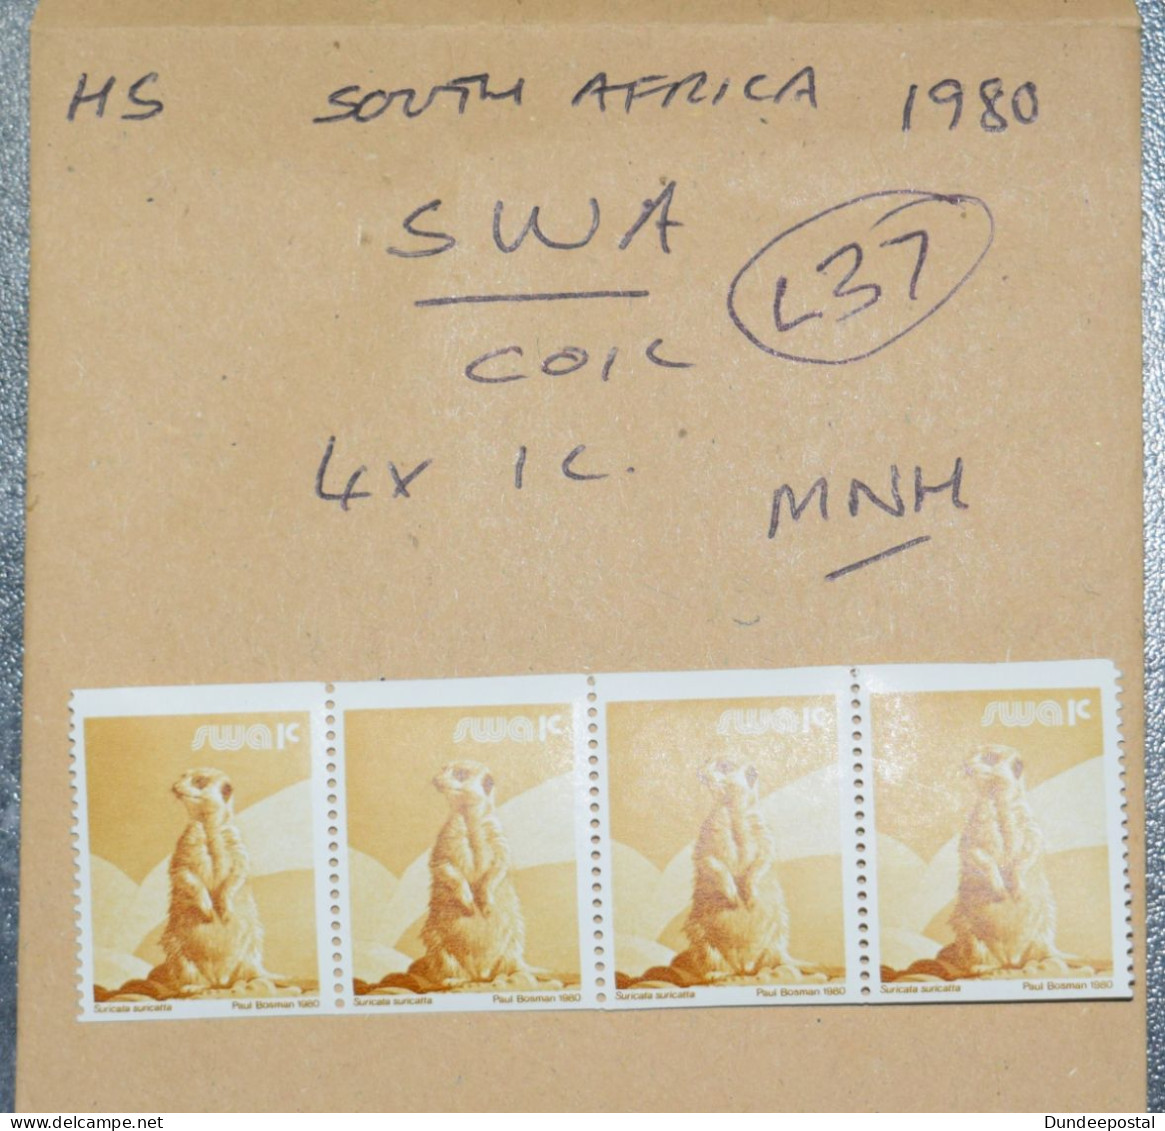 SOUTH AFRICA  STAMPS SWA Coil X 4 MNH  1980  L37  ~~L@@K~~ - Ongebruikt